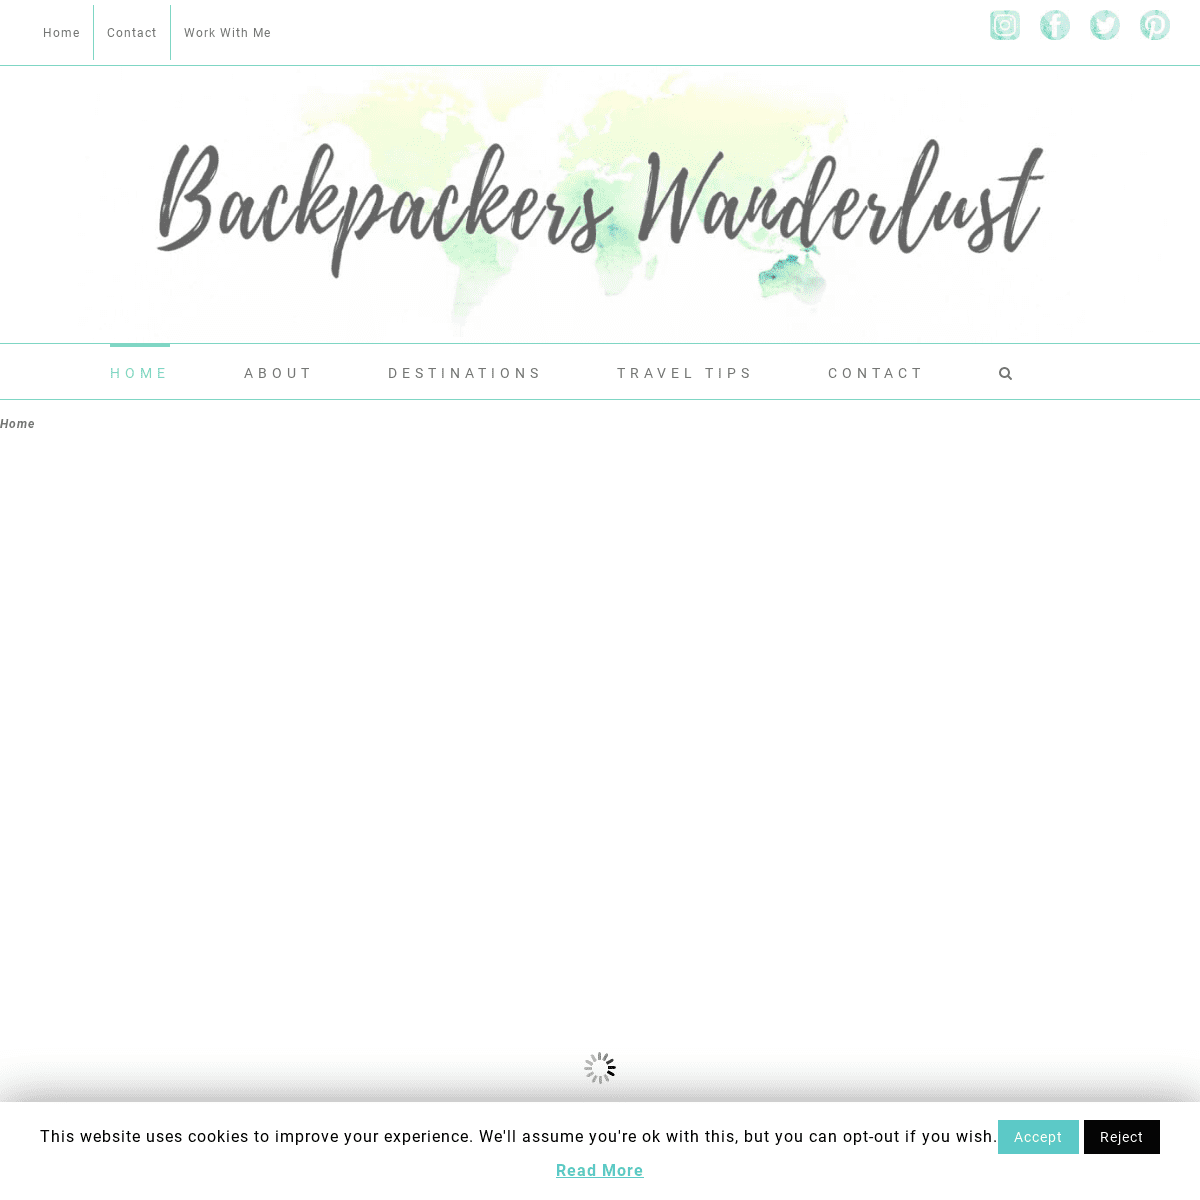 A complete backup of backpackerswanderlust.com